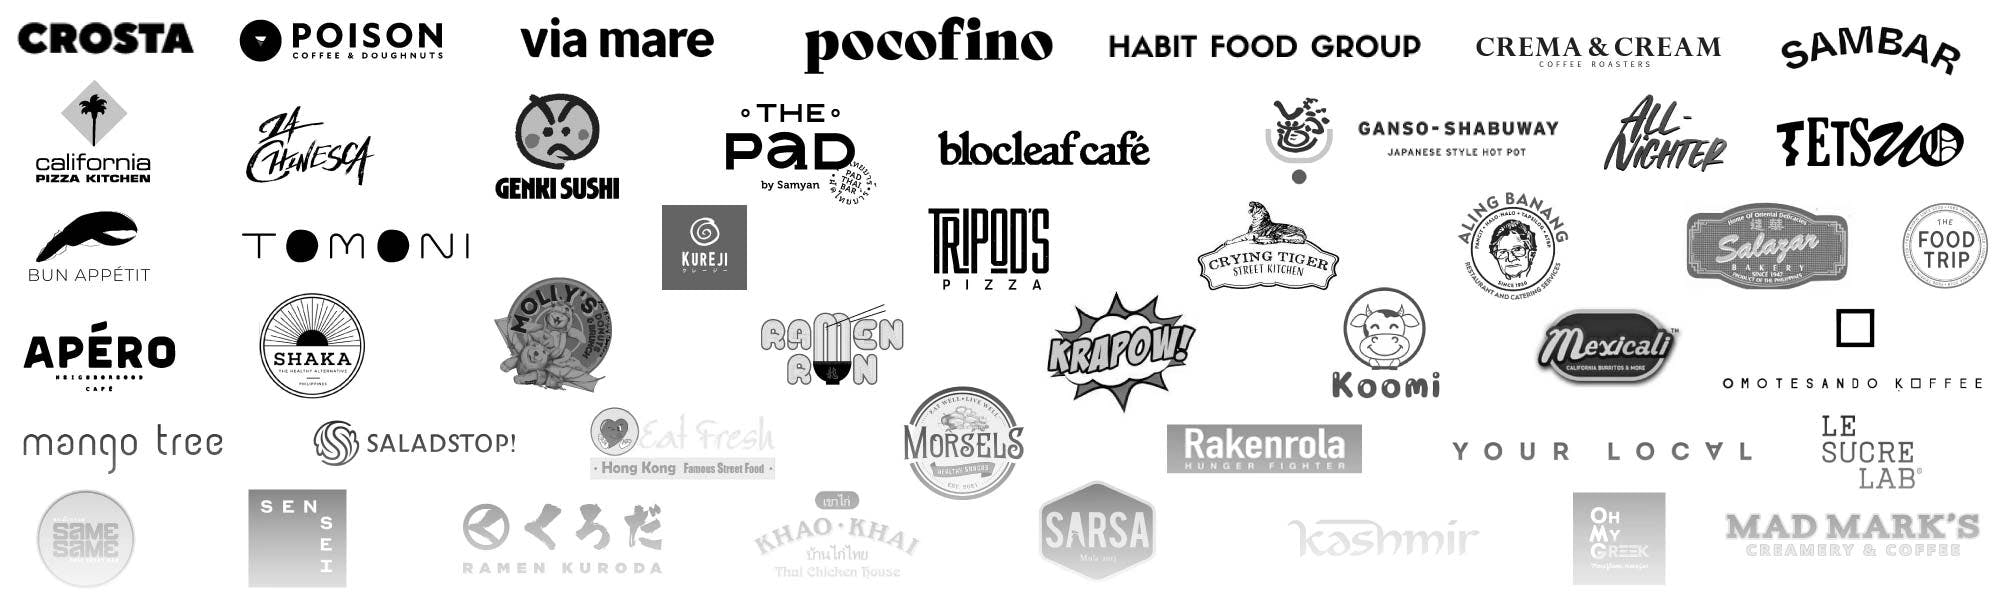 Pickup app client logos